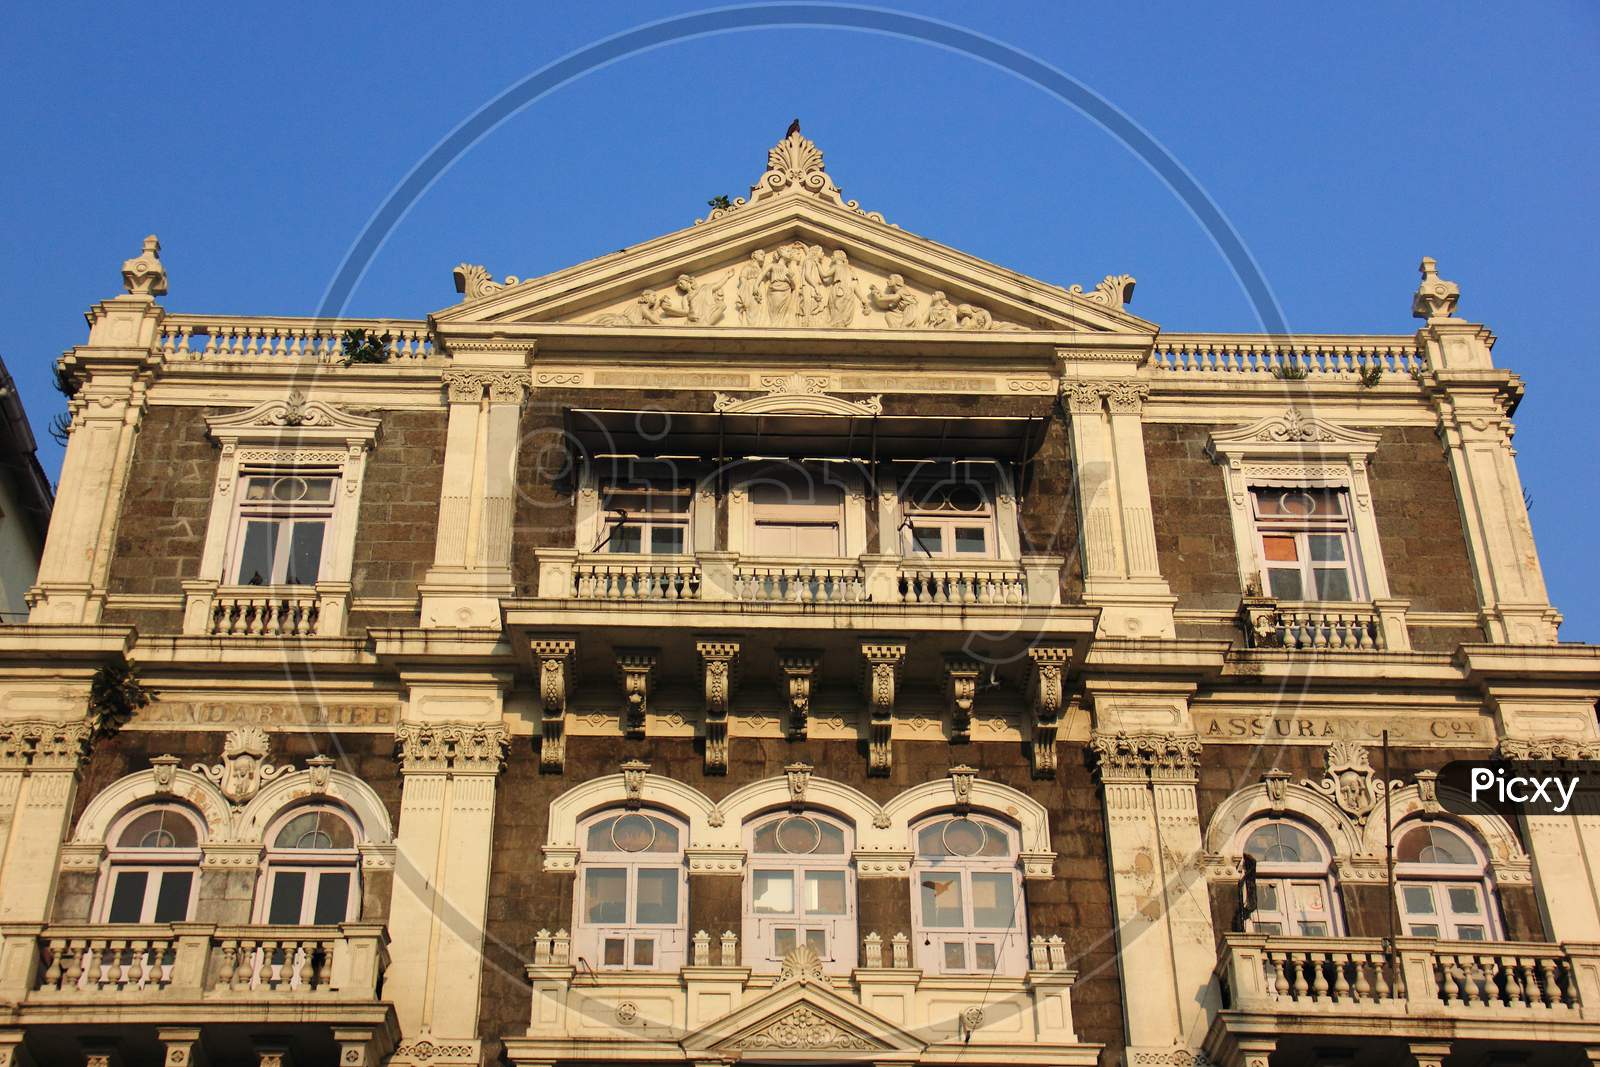 Mumbai historical Buildings in Fort Area near Horiman Circle, British period, Mumbai, India